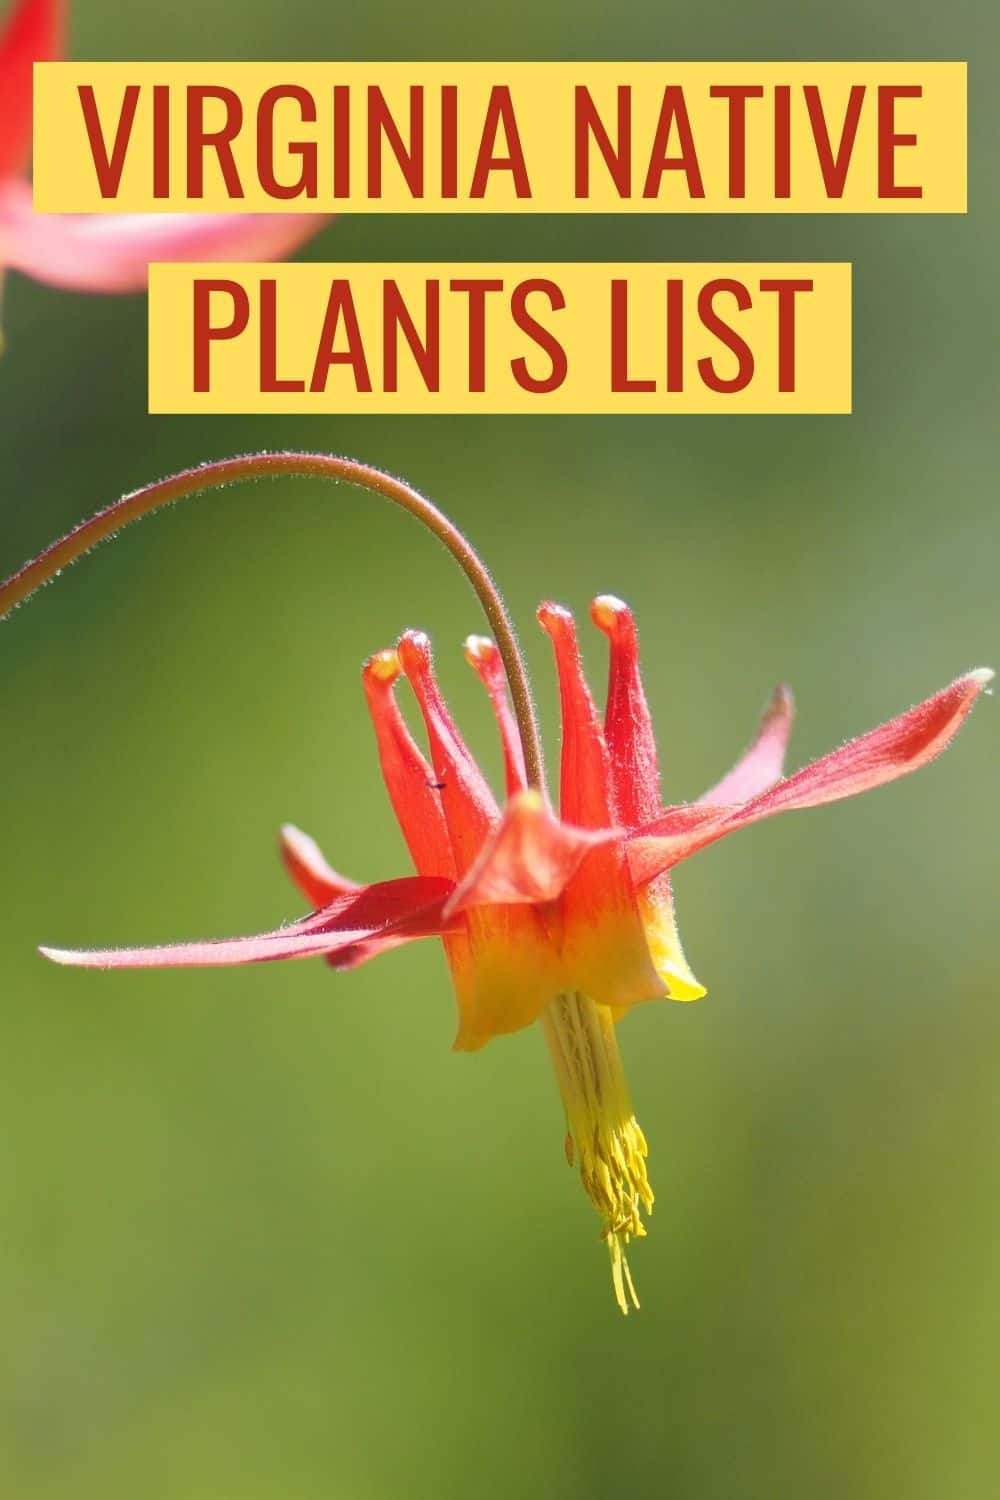 Virginia native plants list